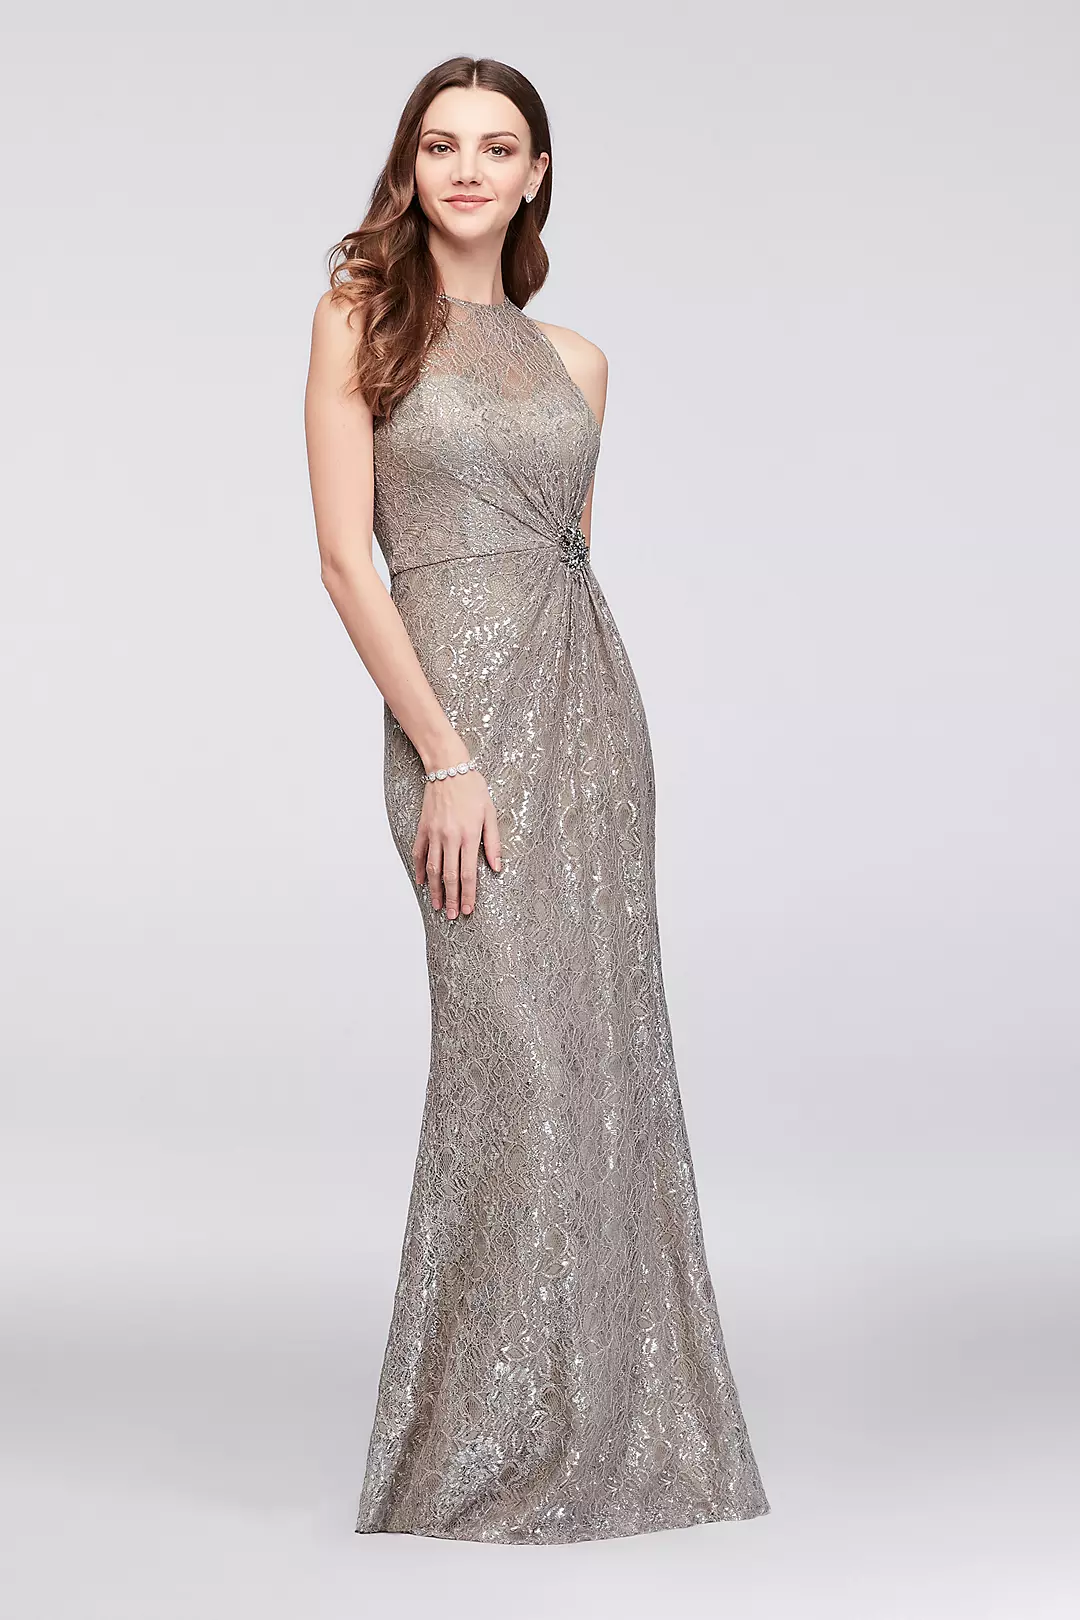 Metallic Lace Soft Sheath Dress with Waist Detail Image